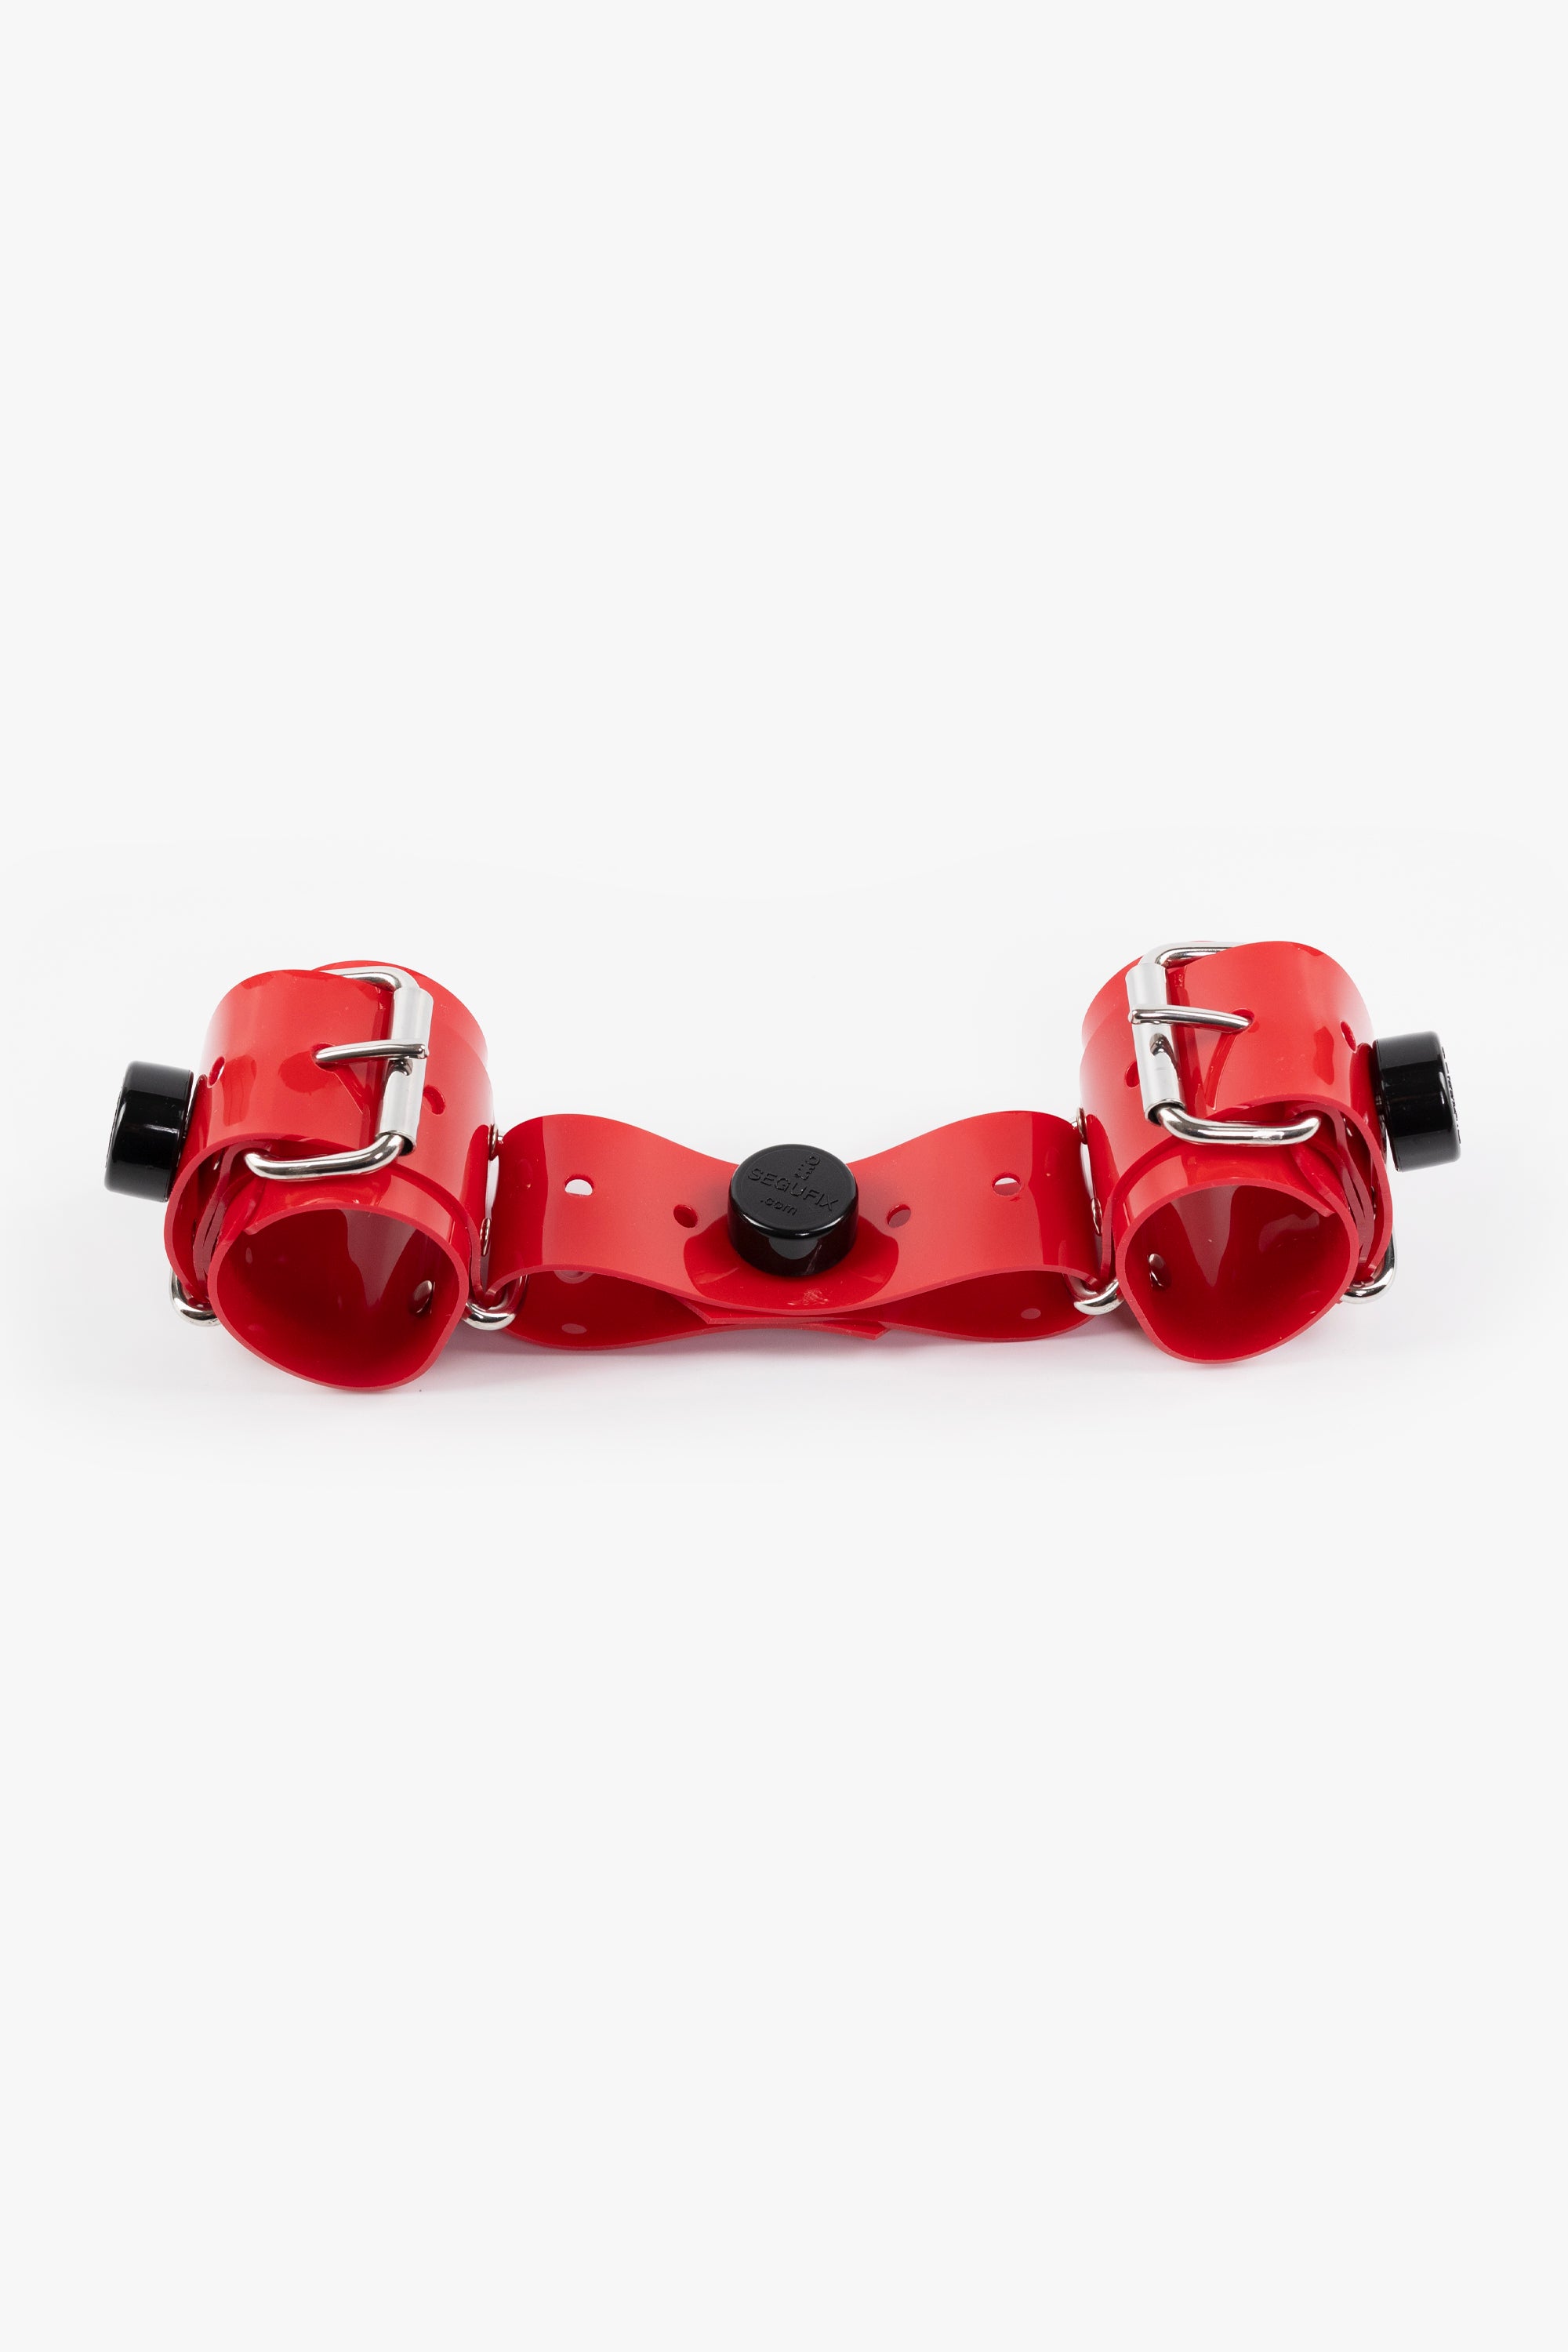 Lockable segufix wrist cuffs, red/chrome